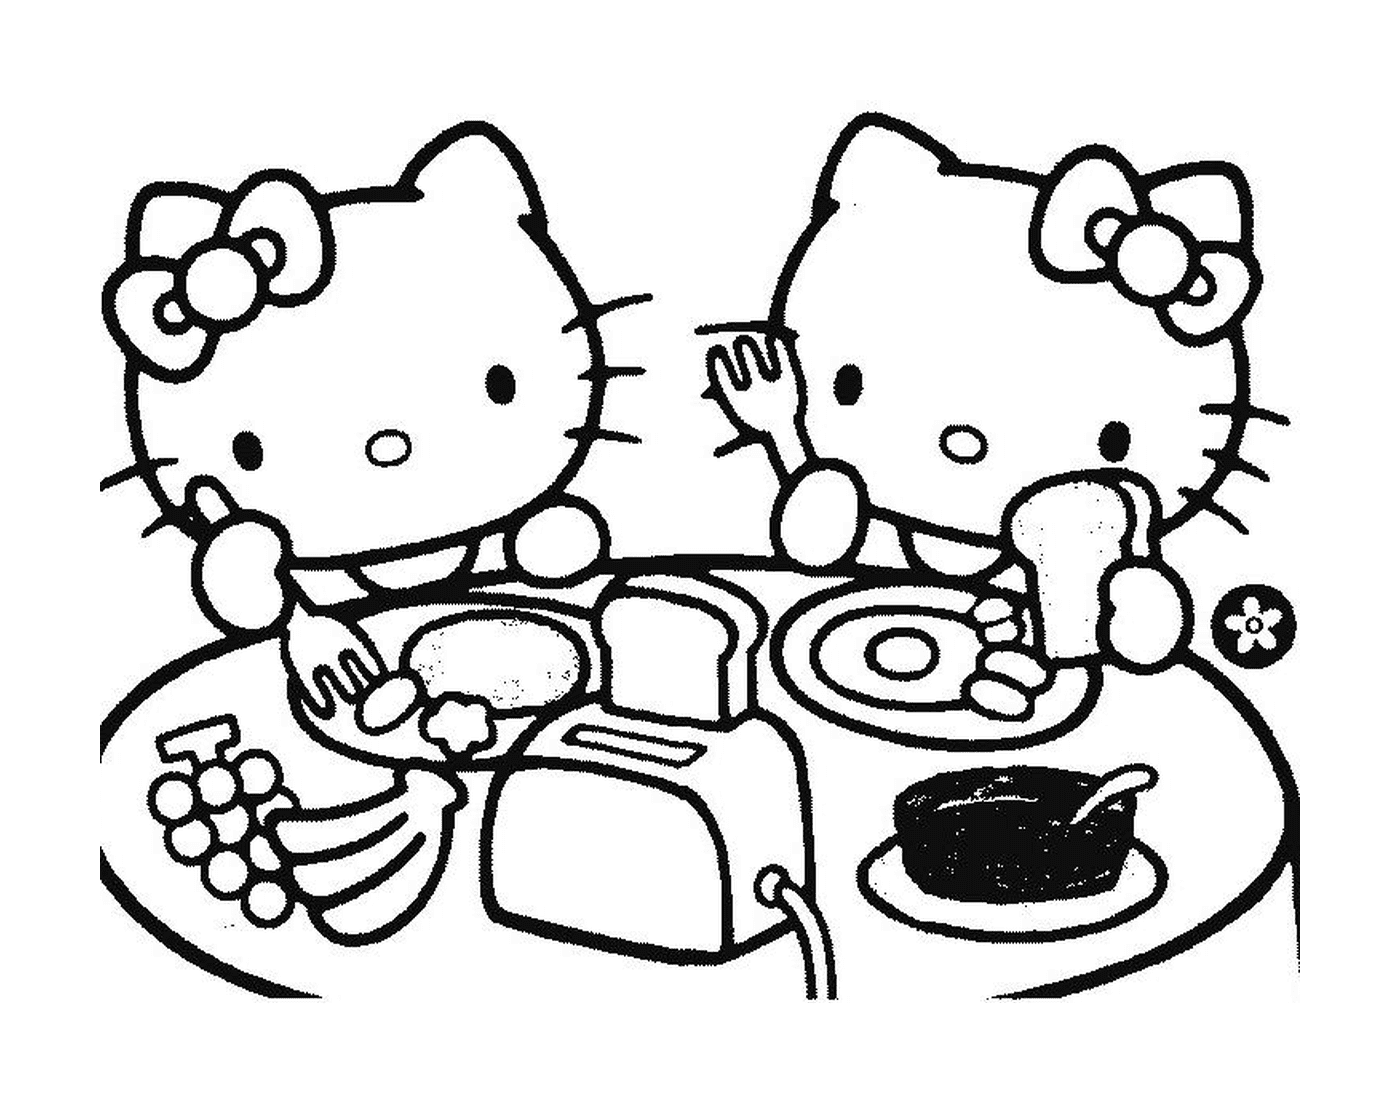   Deux Hello Kitty assises à une table 